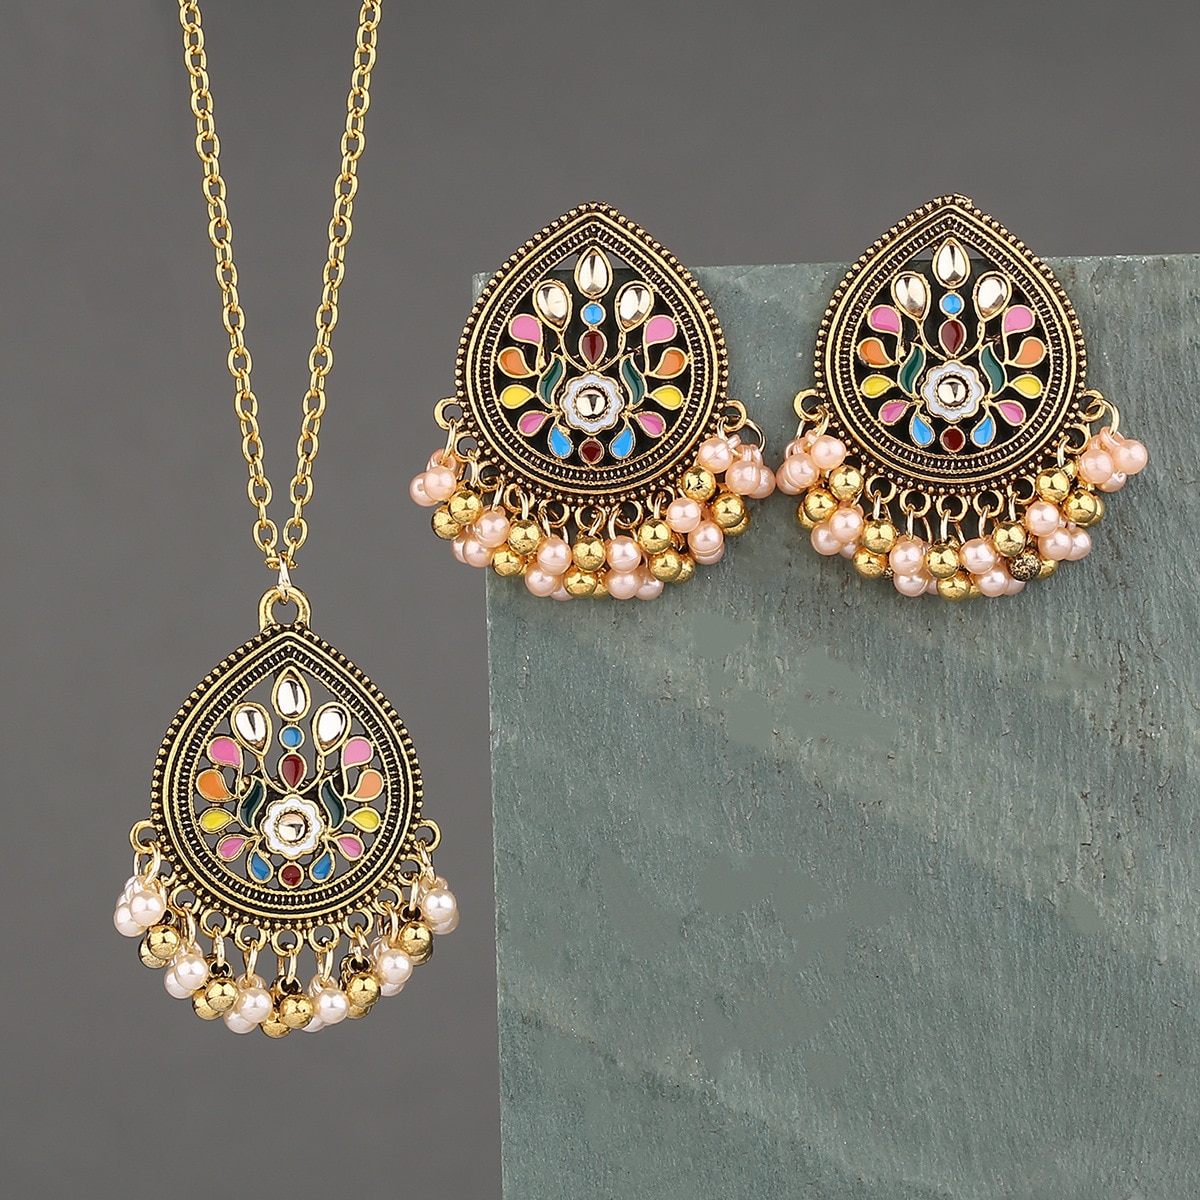 Women39s-Water-Drop-Indian-Jewelry-Set-Gold-Color-EarringNecklace-Set-Bijoux-Pearl-Beads-Wedding-Jew-3256804354500649-3